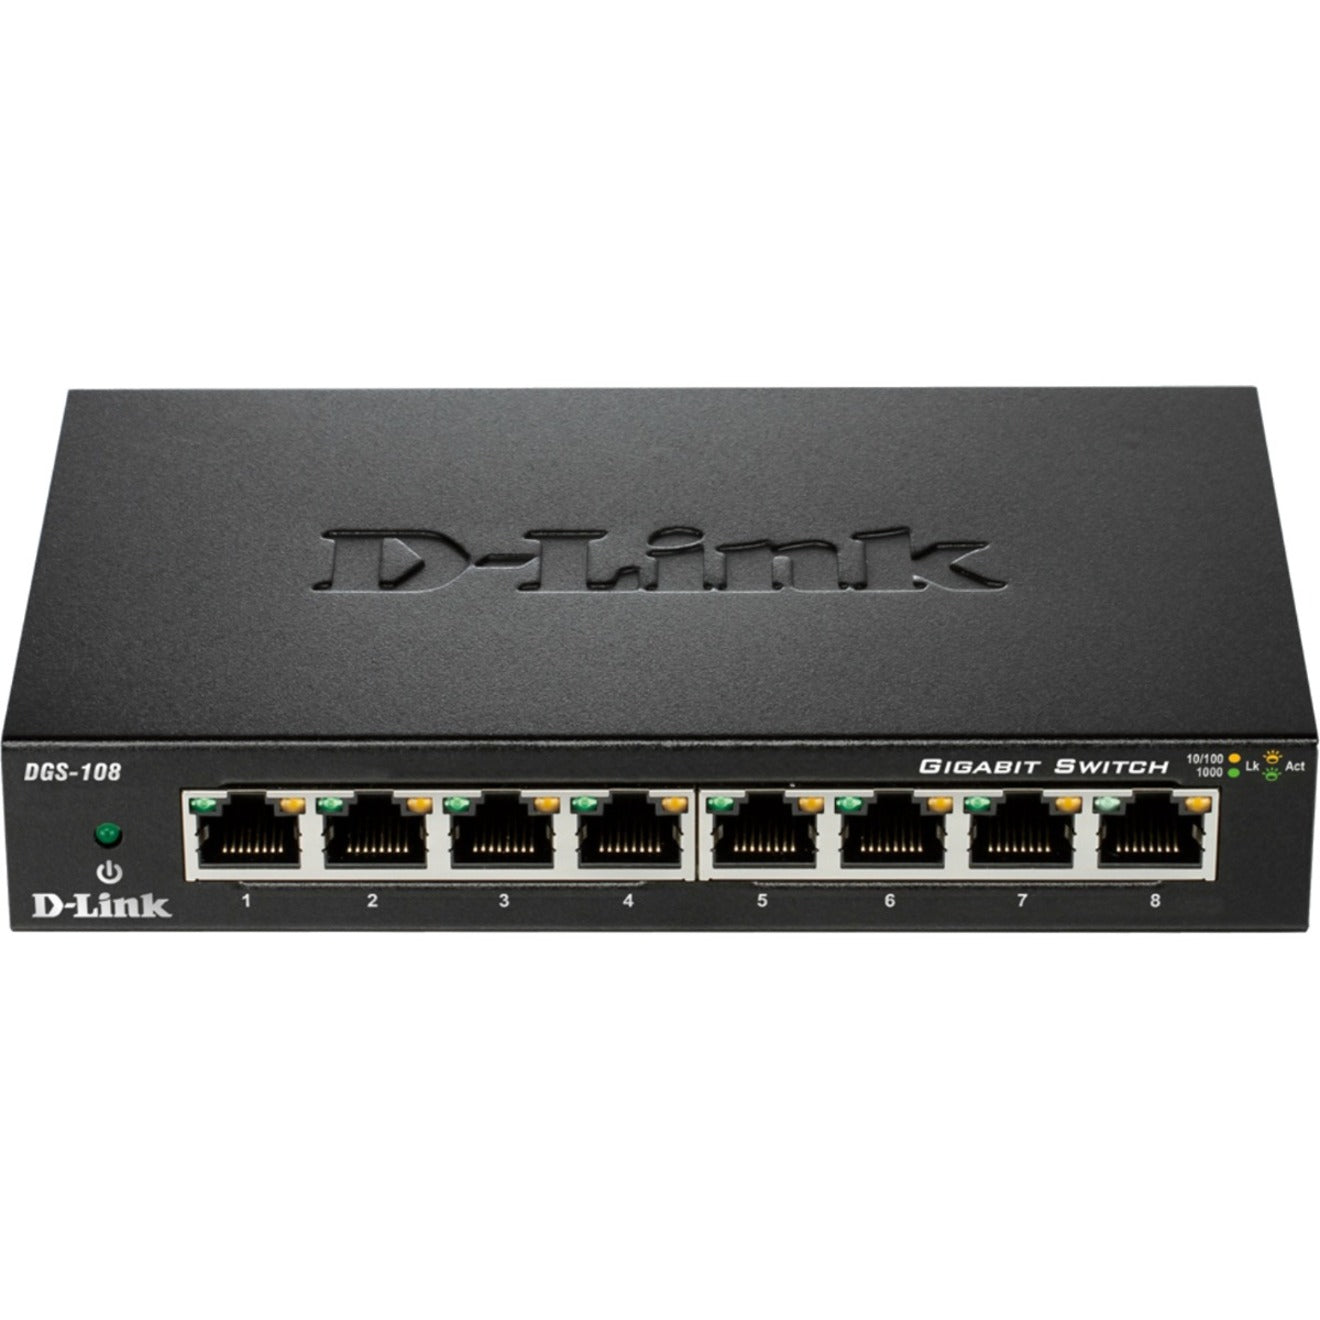 D-Link DGS-108GL DGS-108 Ethernet Switch, 8-Port Gigabit Network, Energy Star, 3 Year Warranty